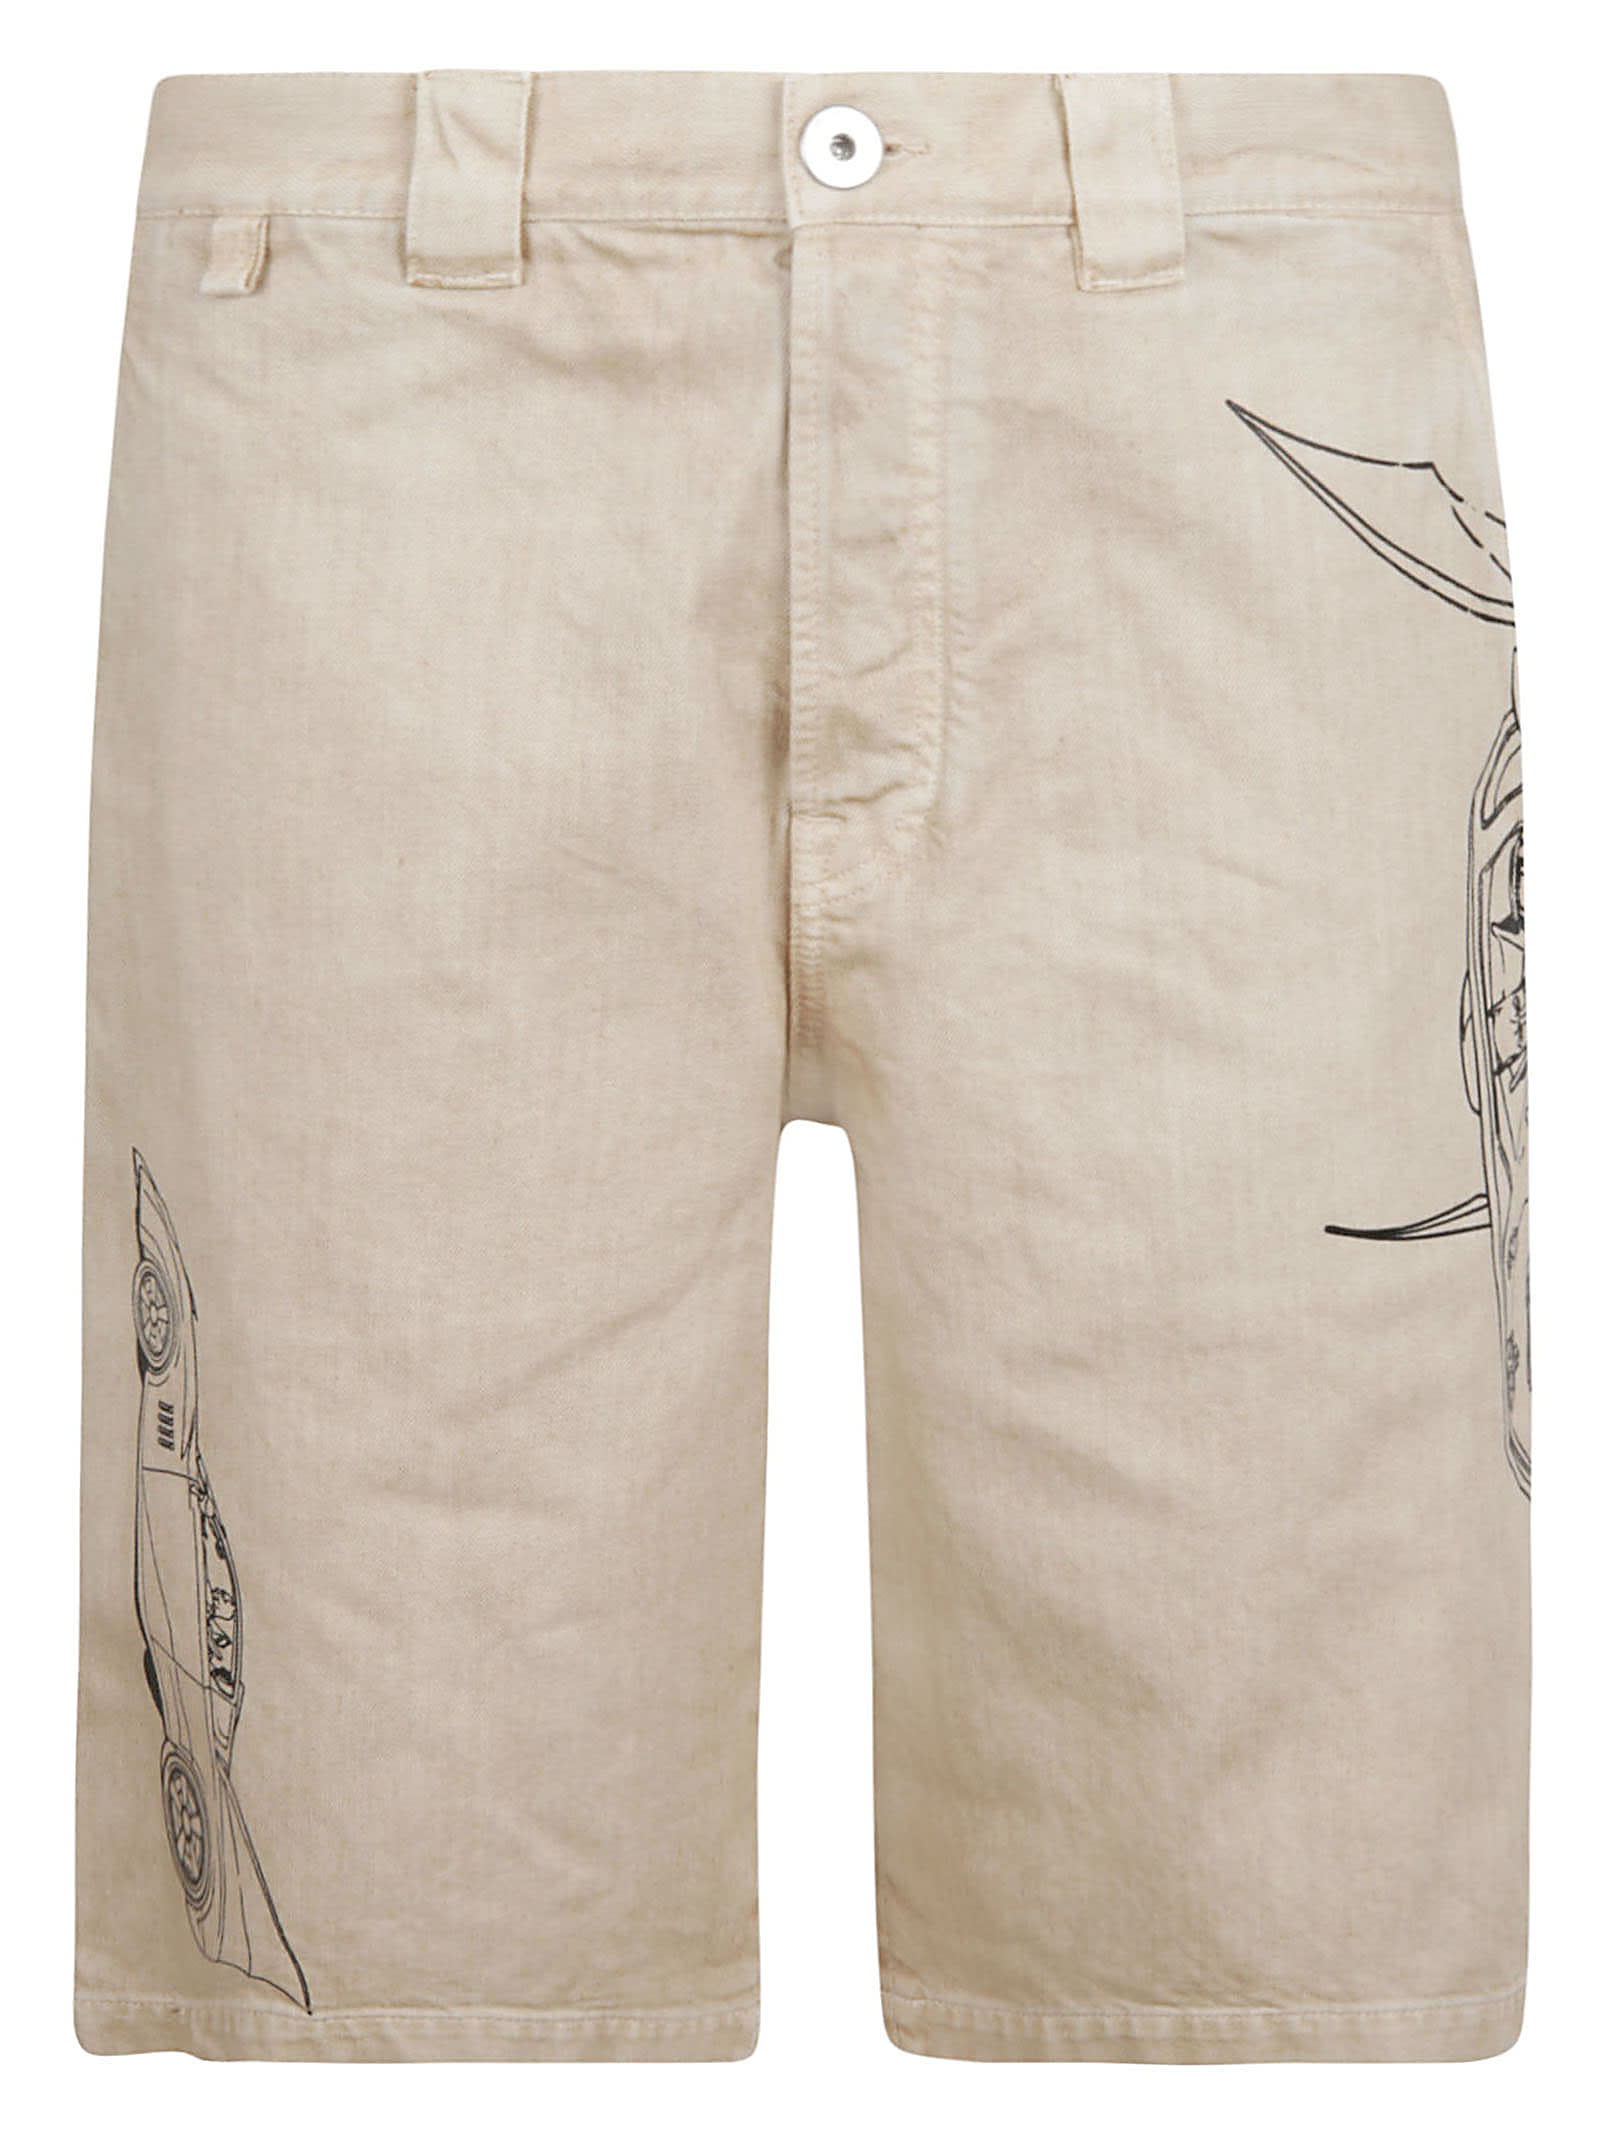 Lanvin Car Printed Trouser Shorts